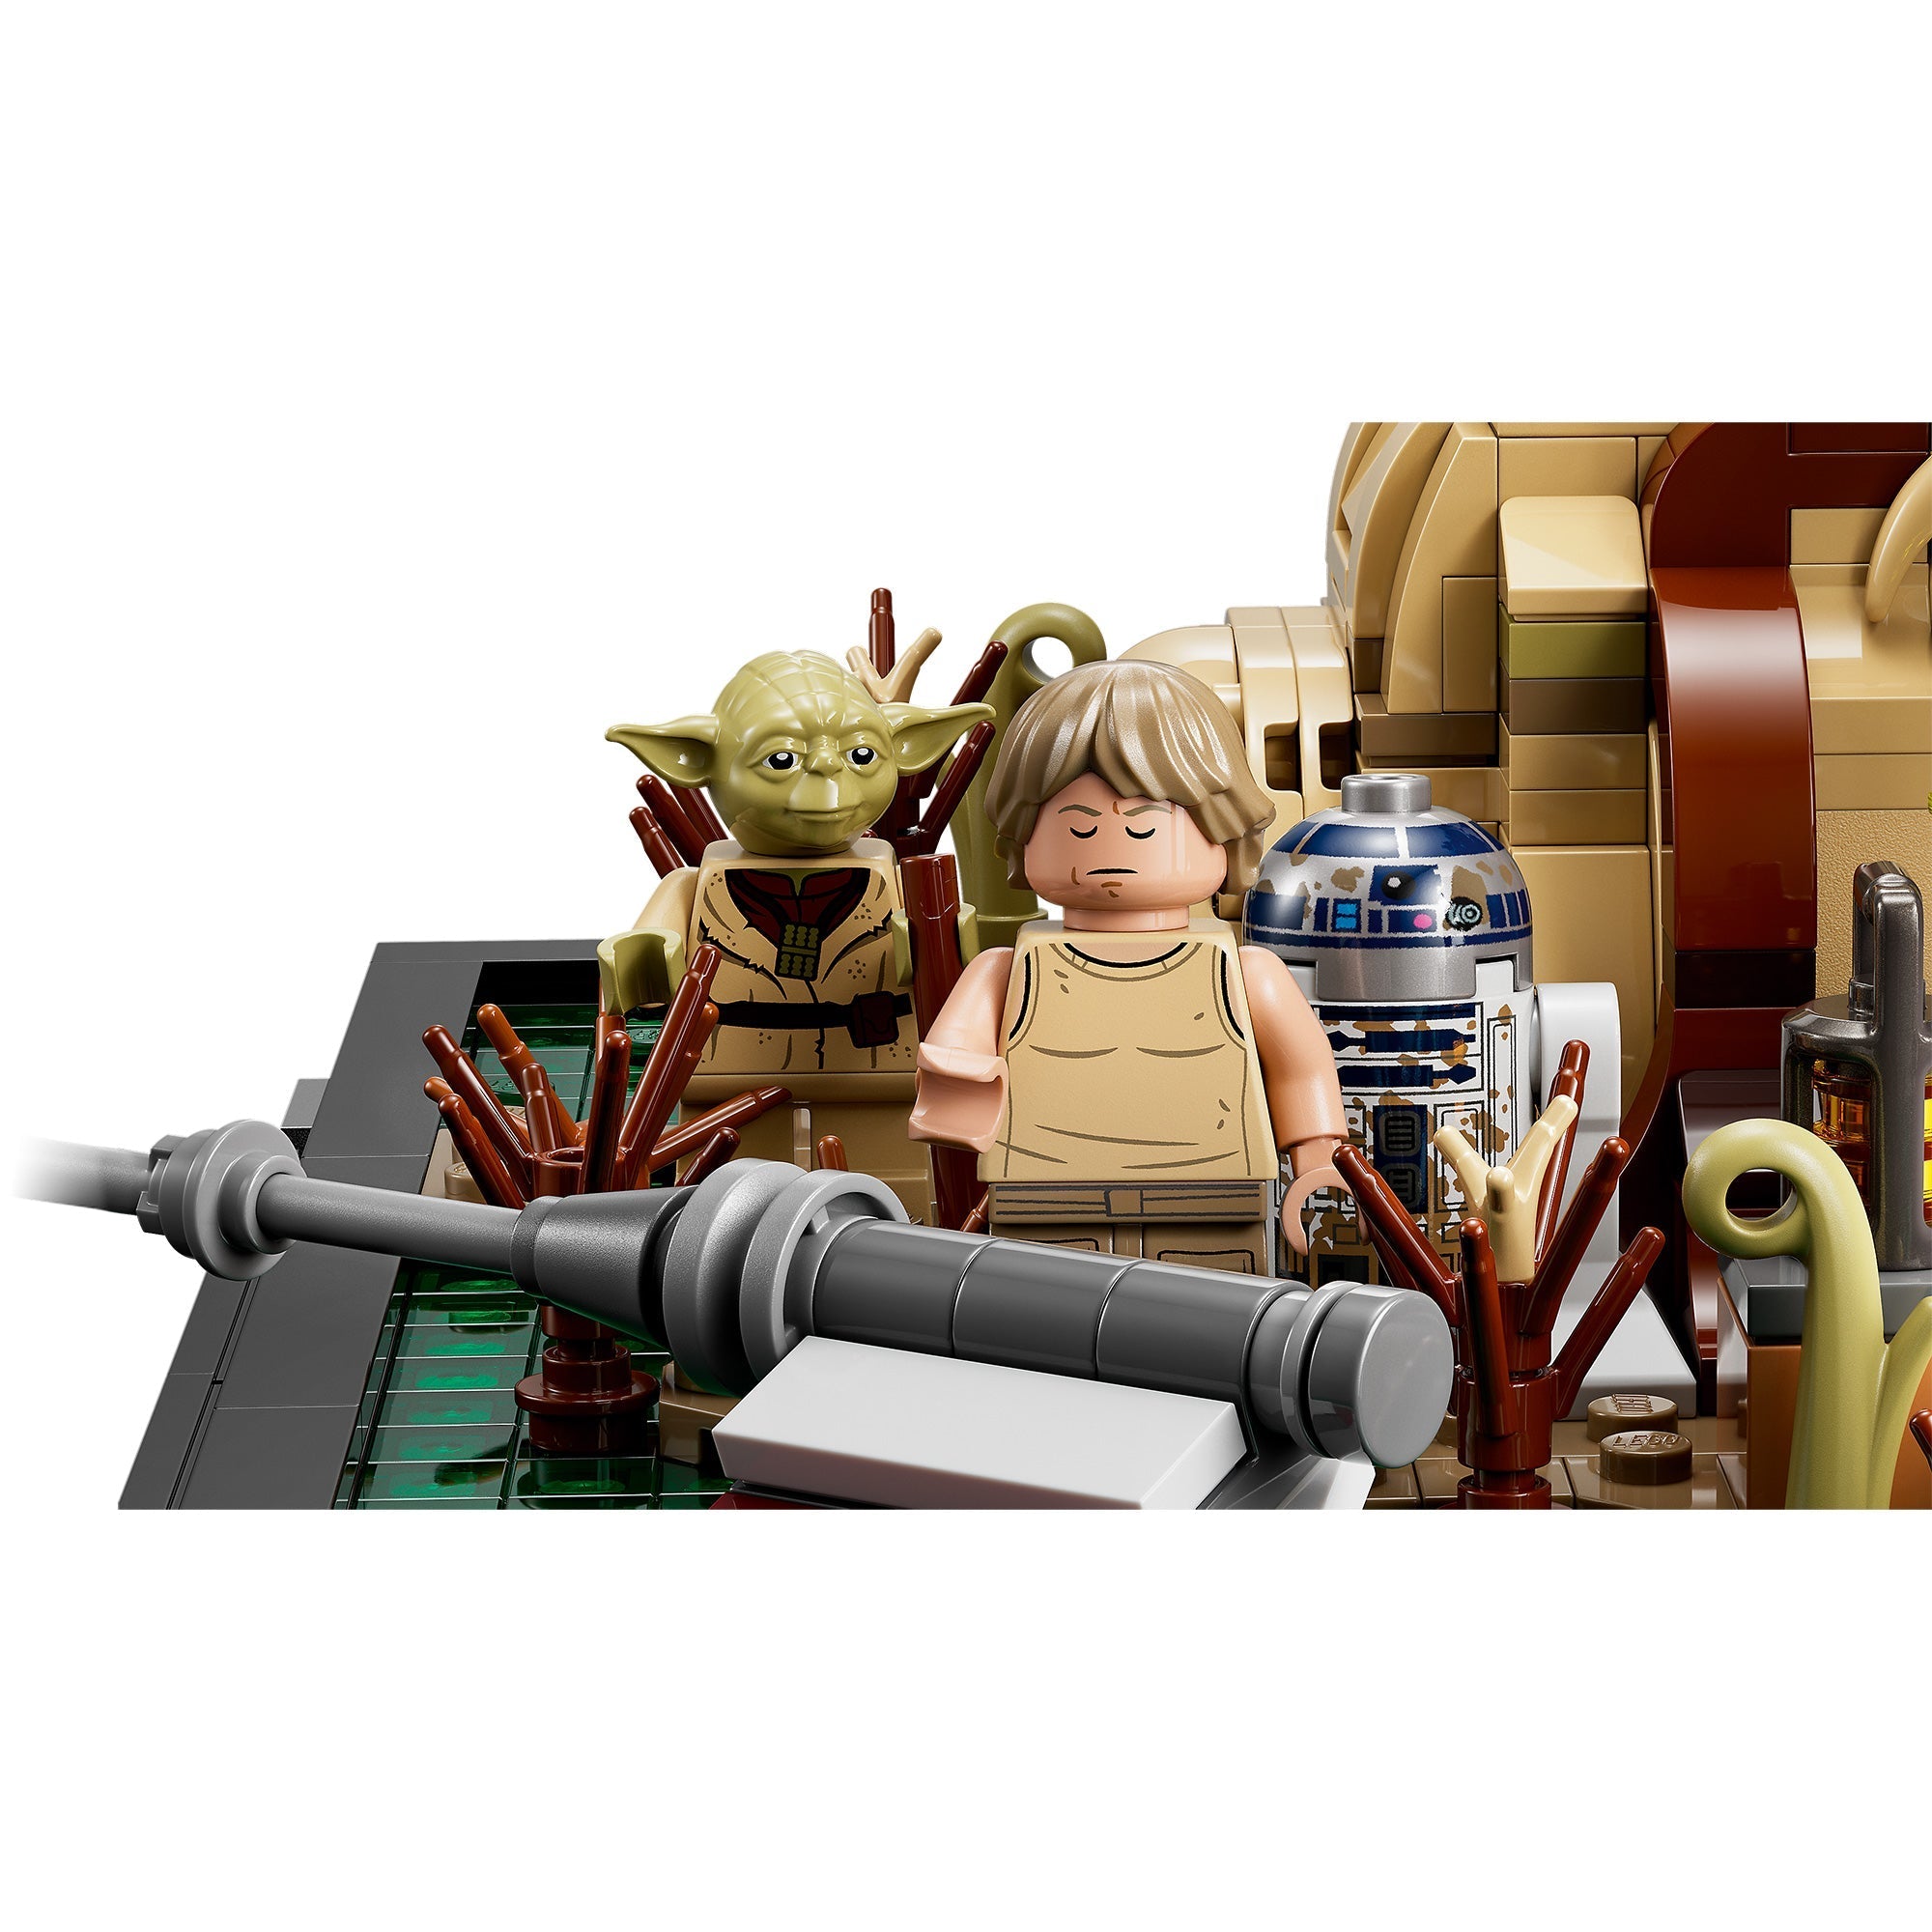 Lego Dagobah Jedi Training Diorama 75330 Light Kit(Don't Miss Out